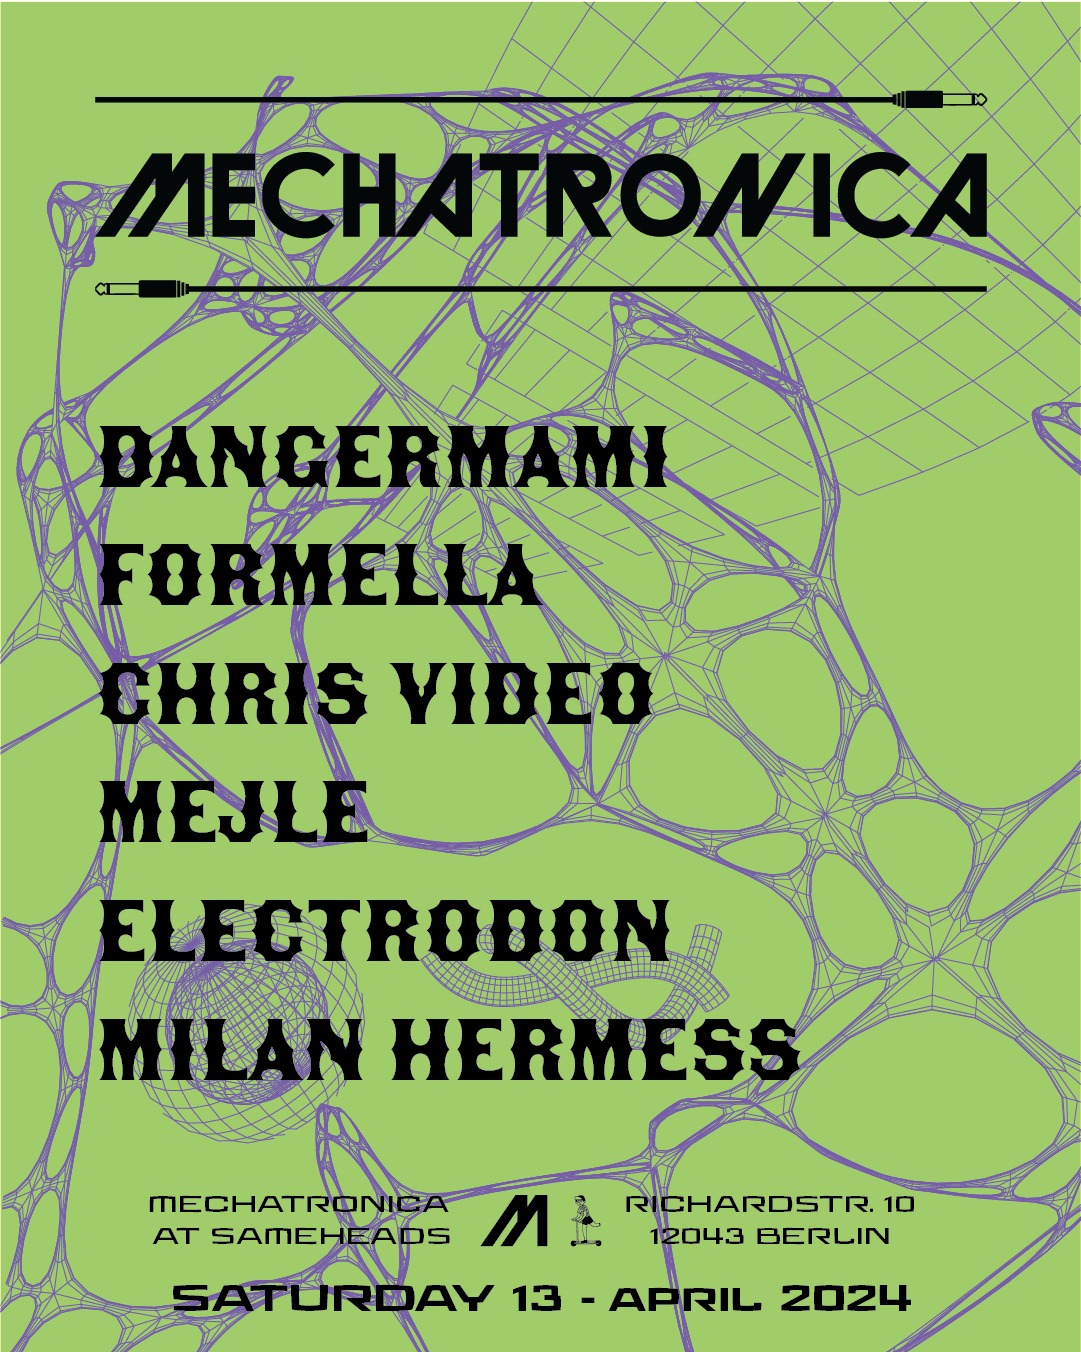 Mechatronica x Sameheads with Dangermami, Formella & Chris Video - フライヤー表